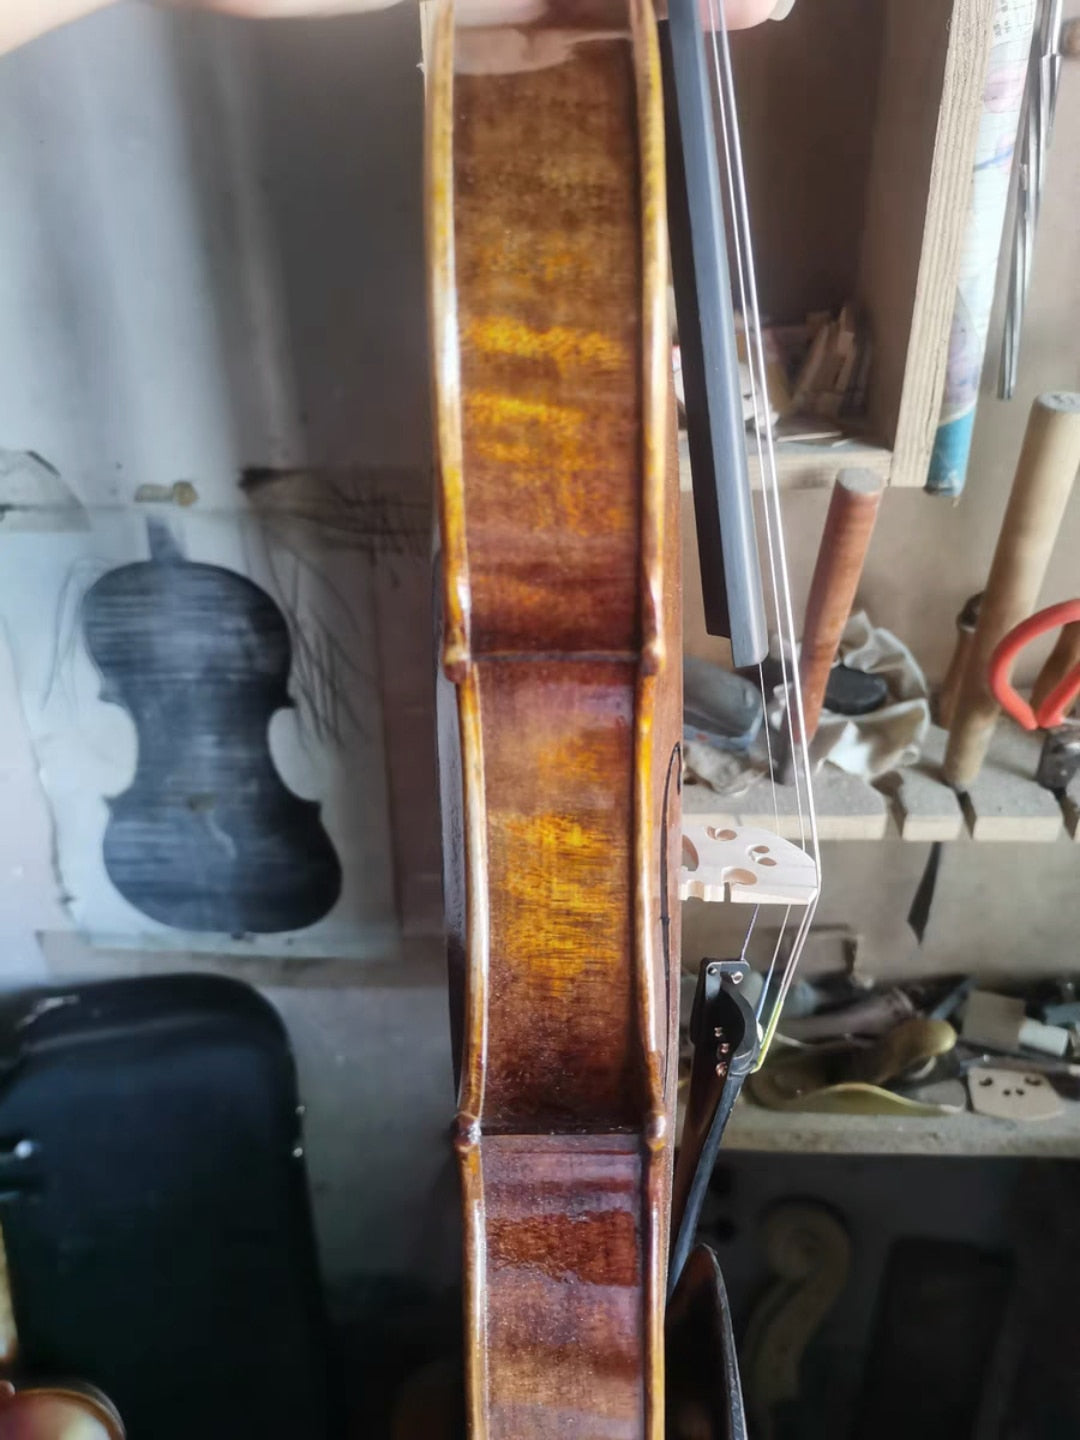 Guarneri 1742 Lord Wilton Handmade Violin 4/4 Italian retro Oil varnish Maple Violin professional Musical Instruments with case